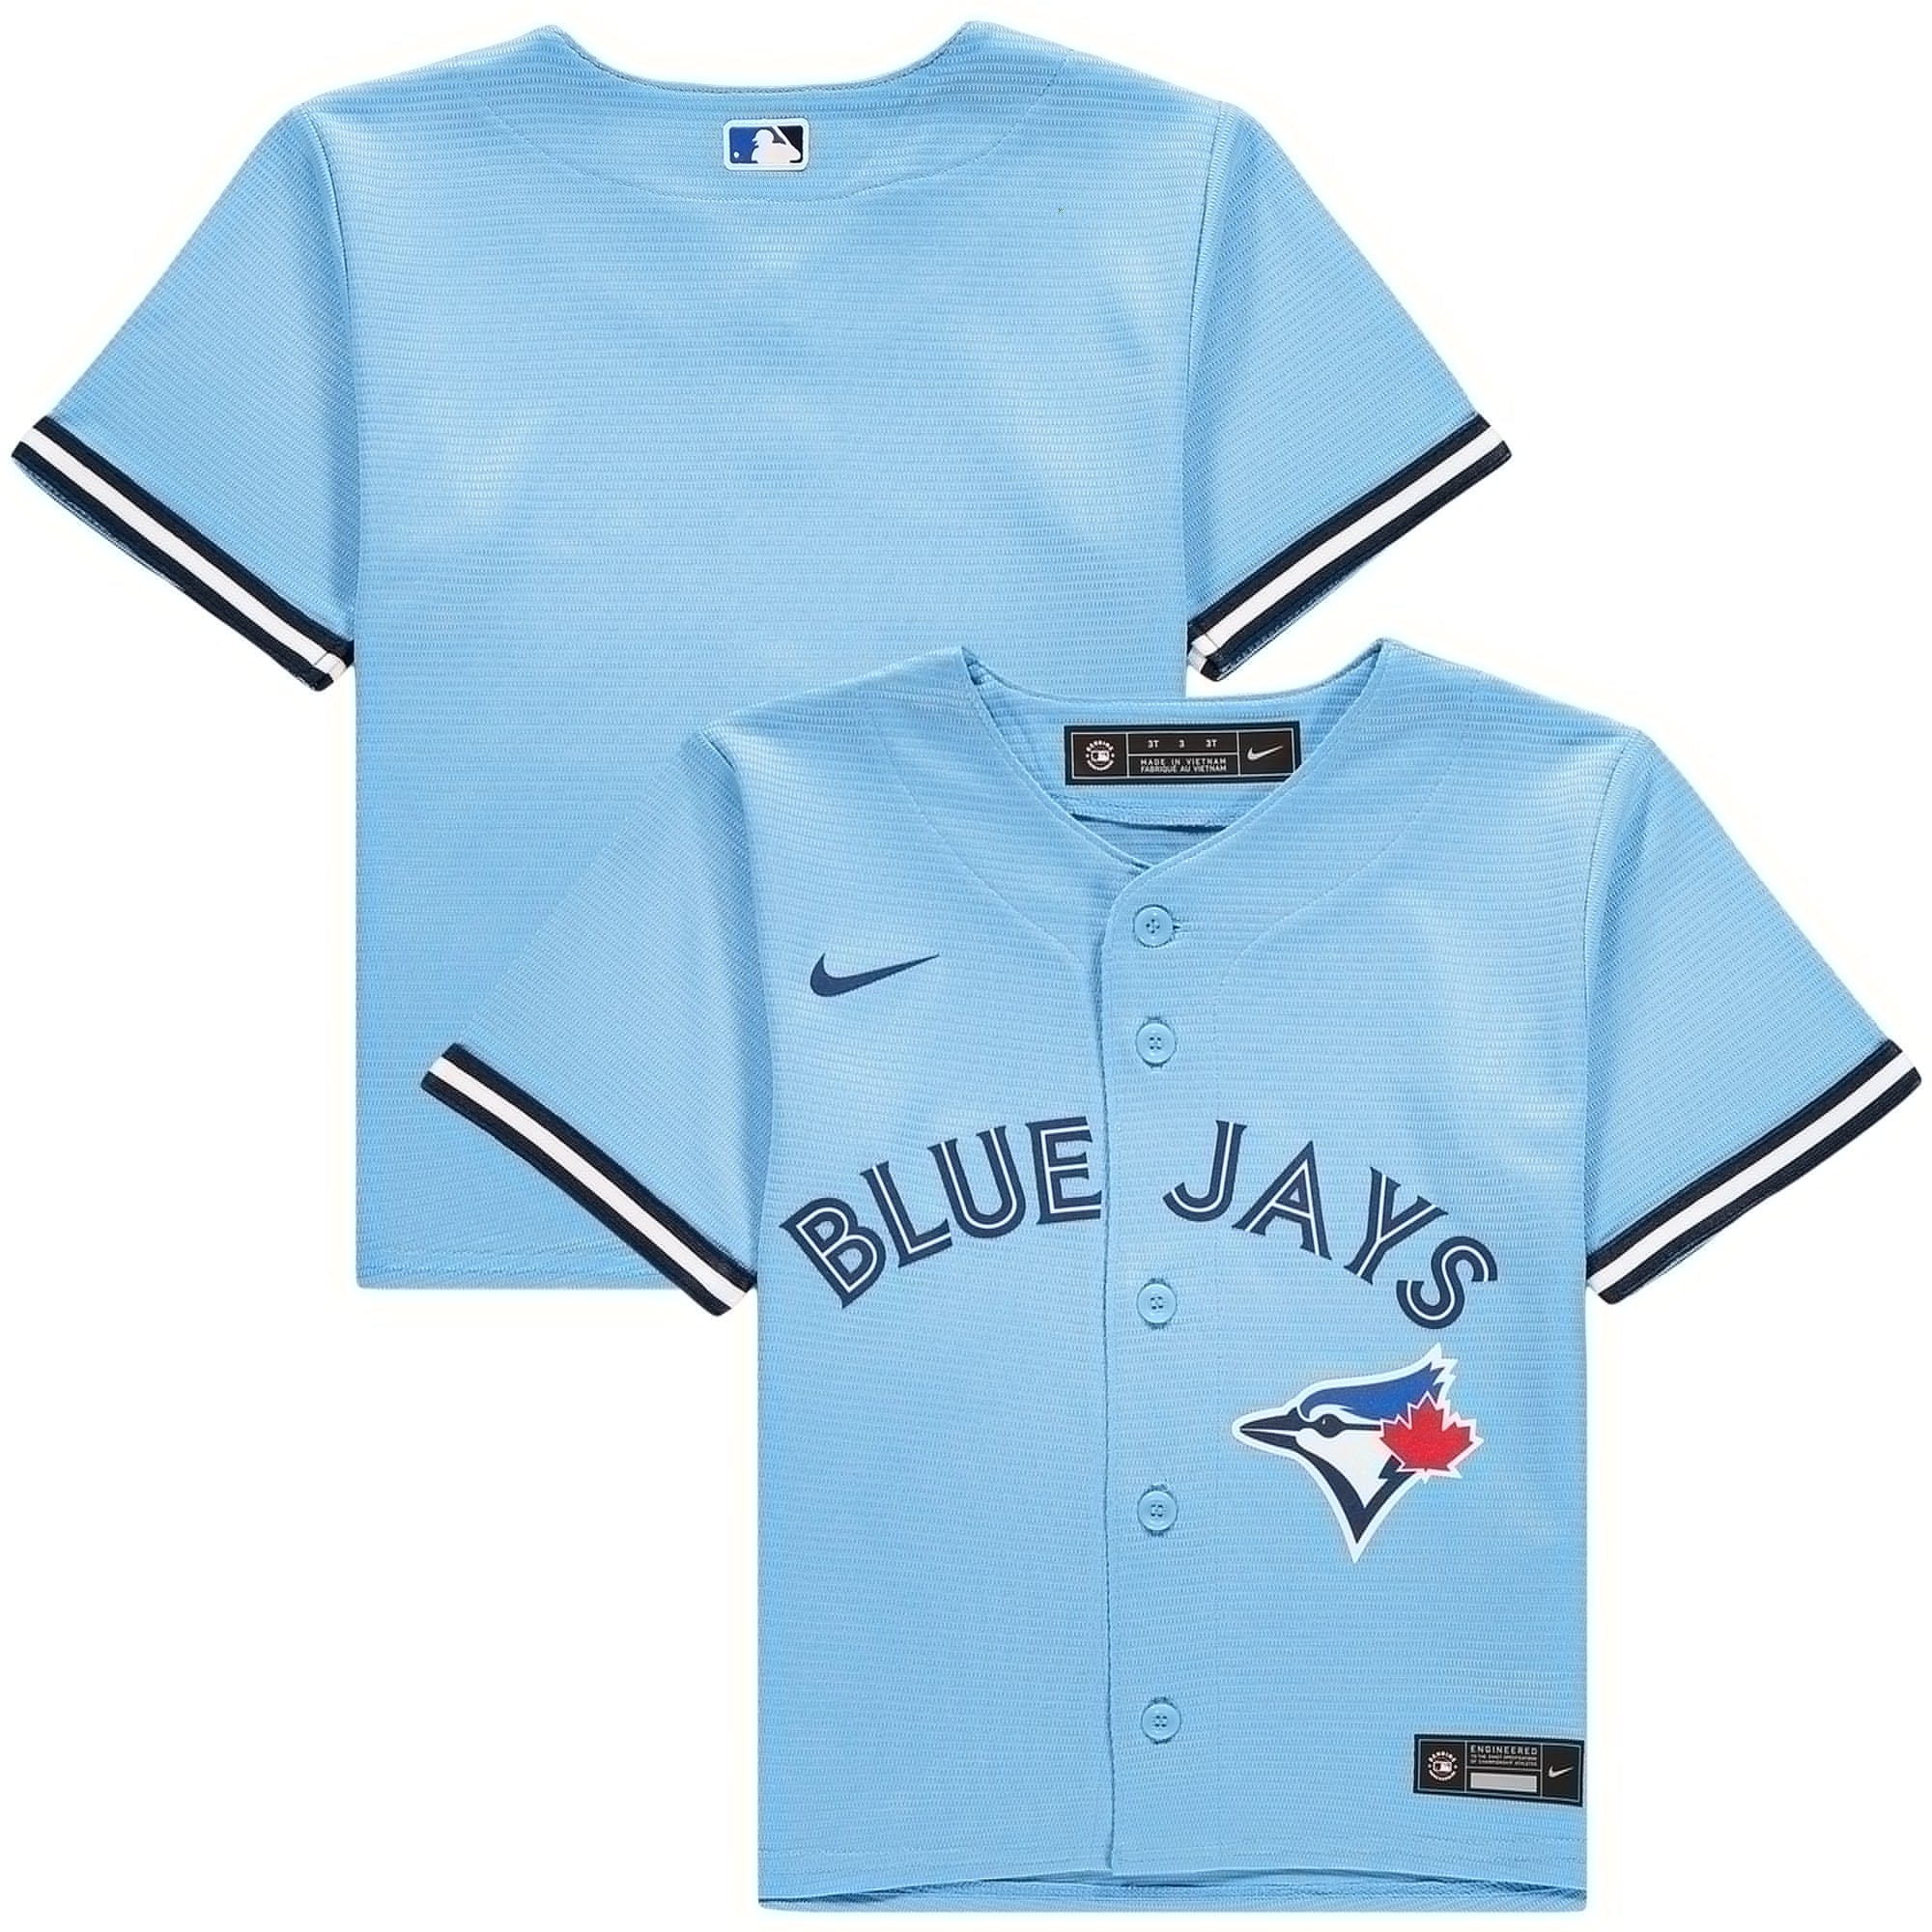 Toronto Blue Jays Nike Official Replica Jersey, Youth, Baseball, MLB